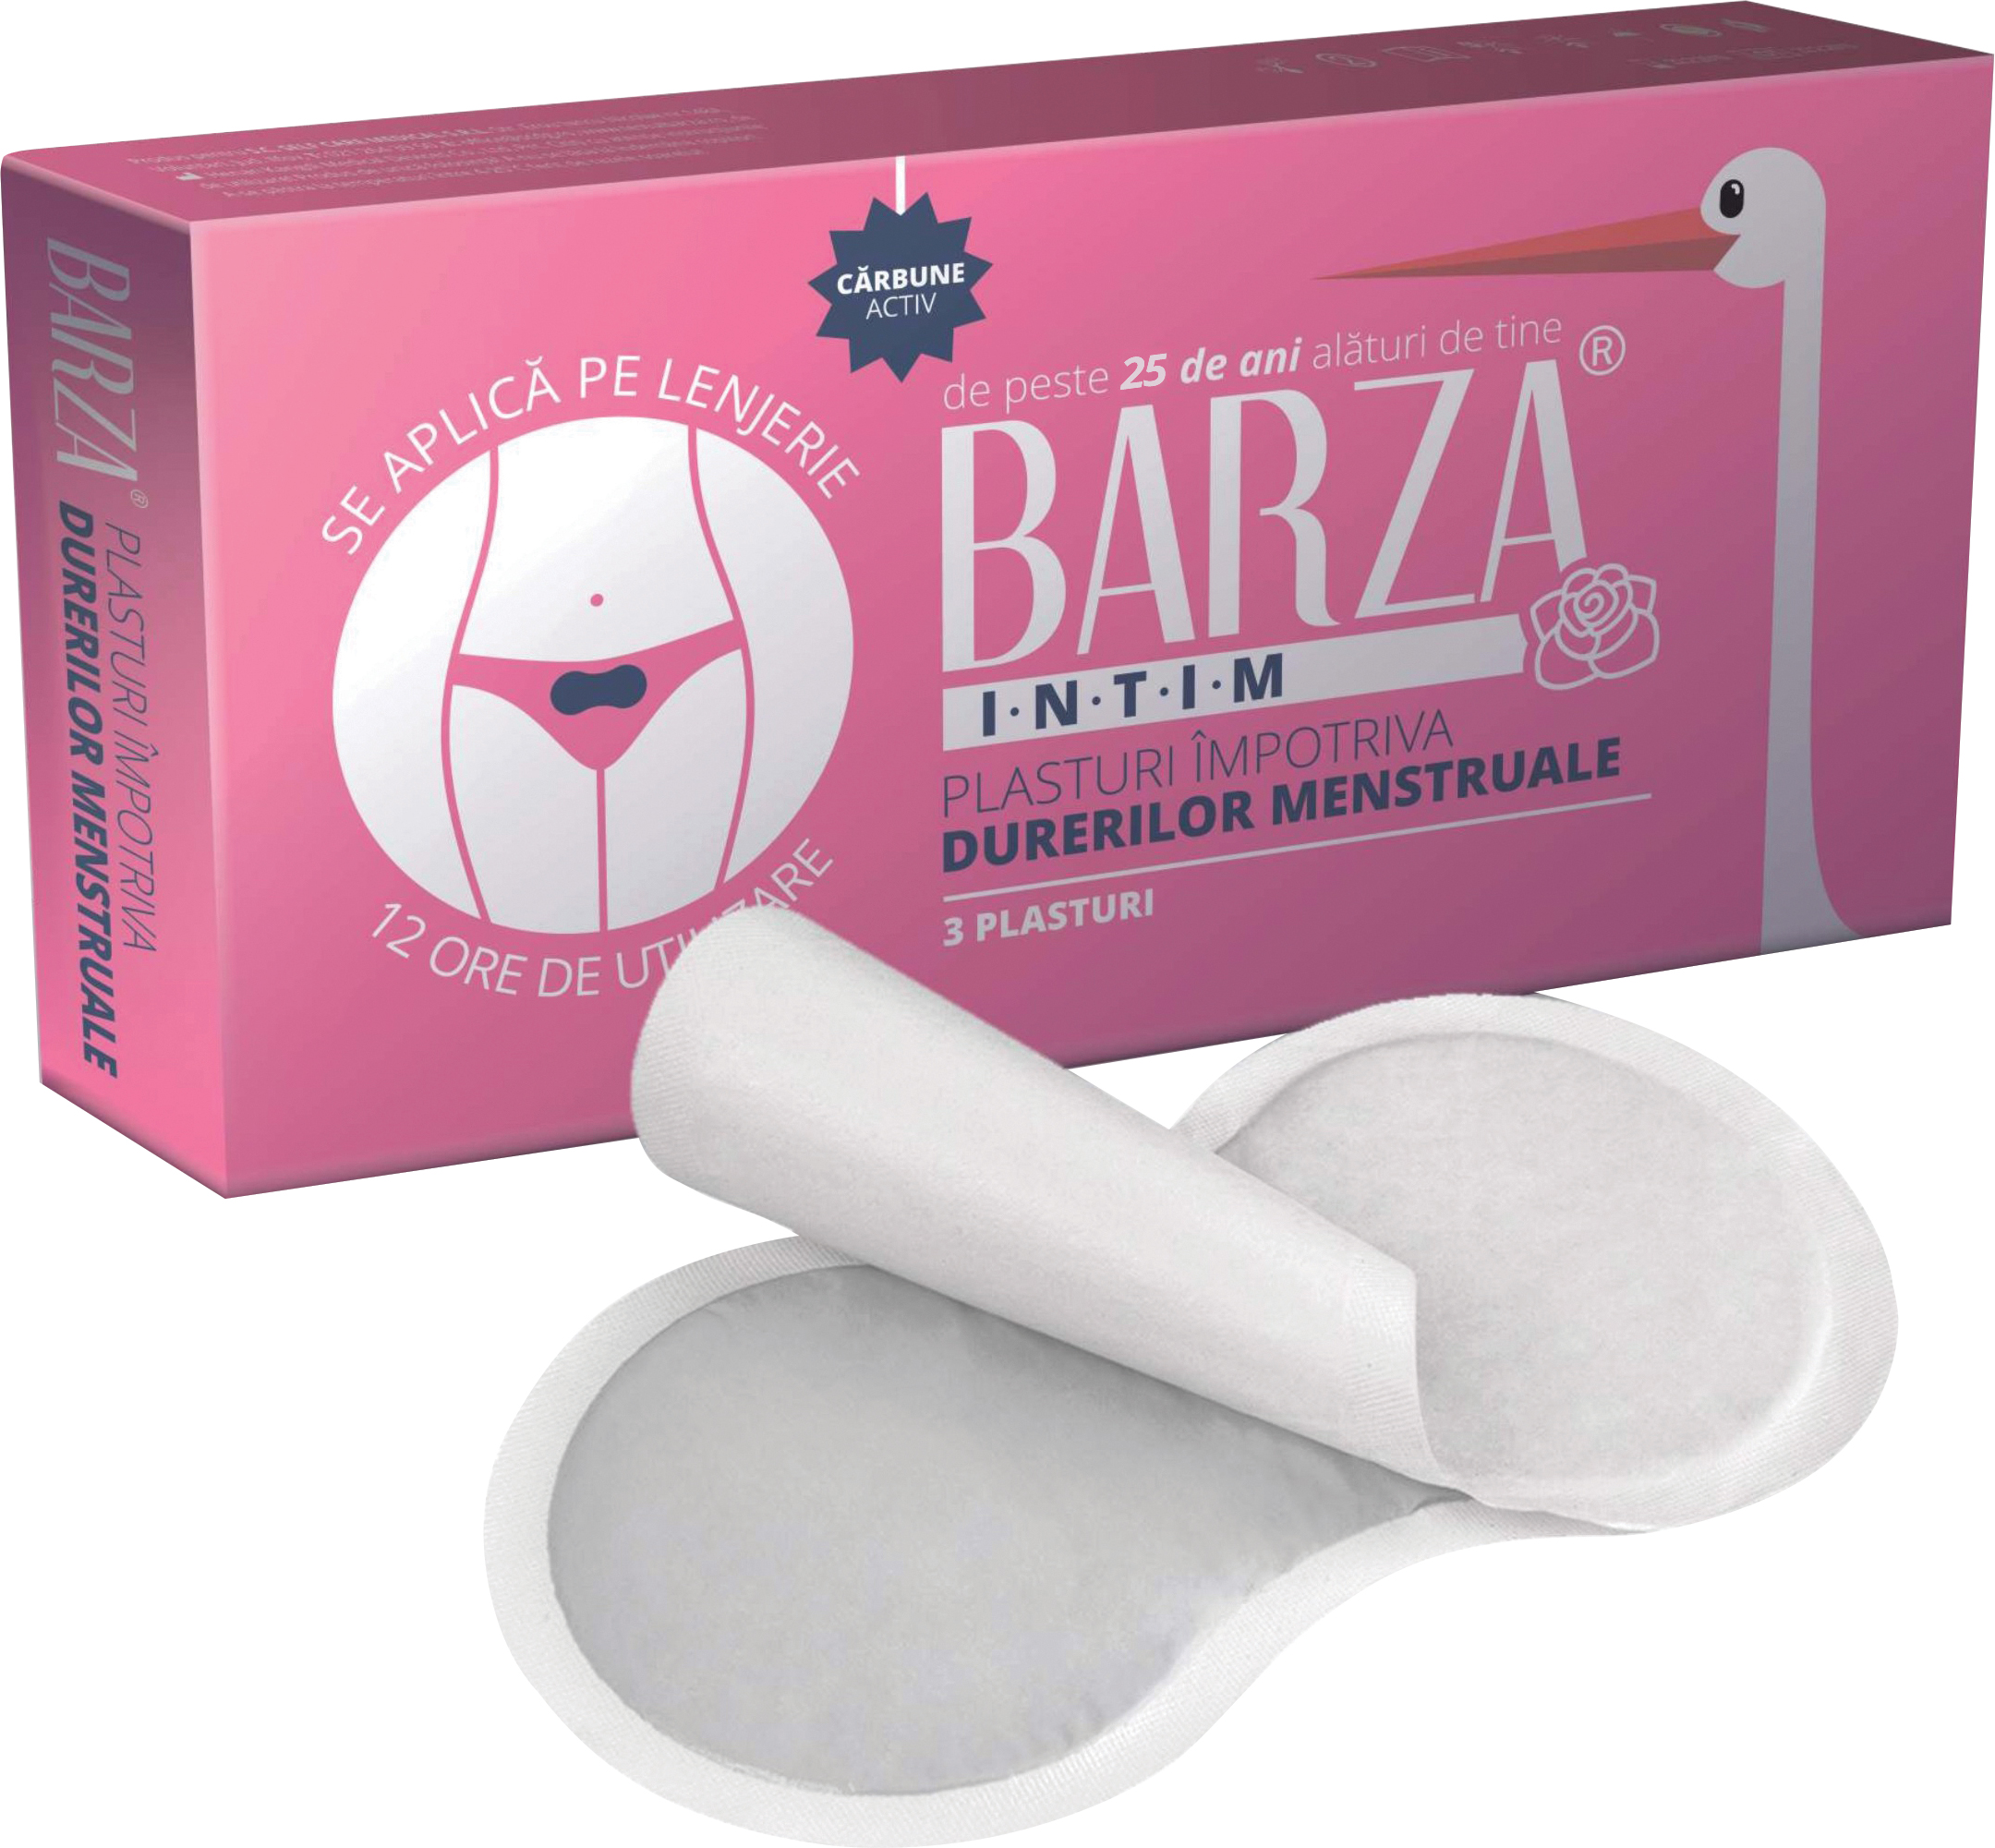 Teste - Barza plasturi impotriva durerilor menstruale, sinapis.ro